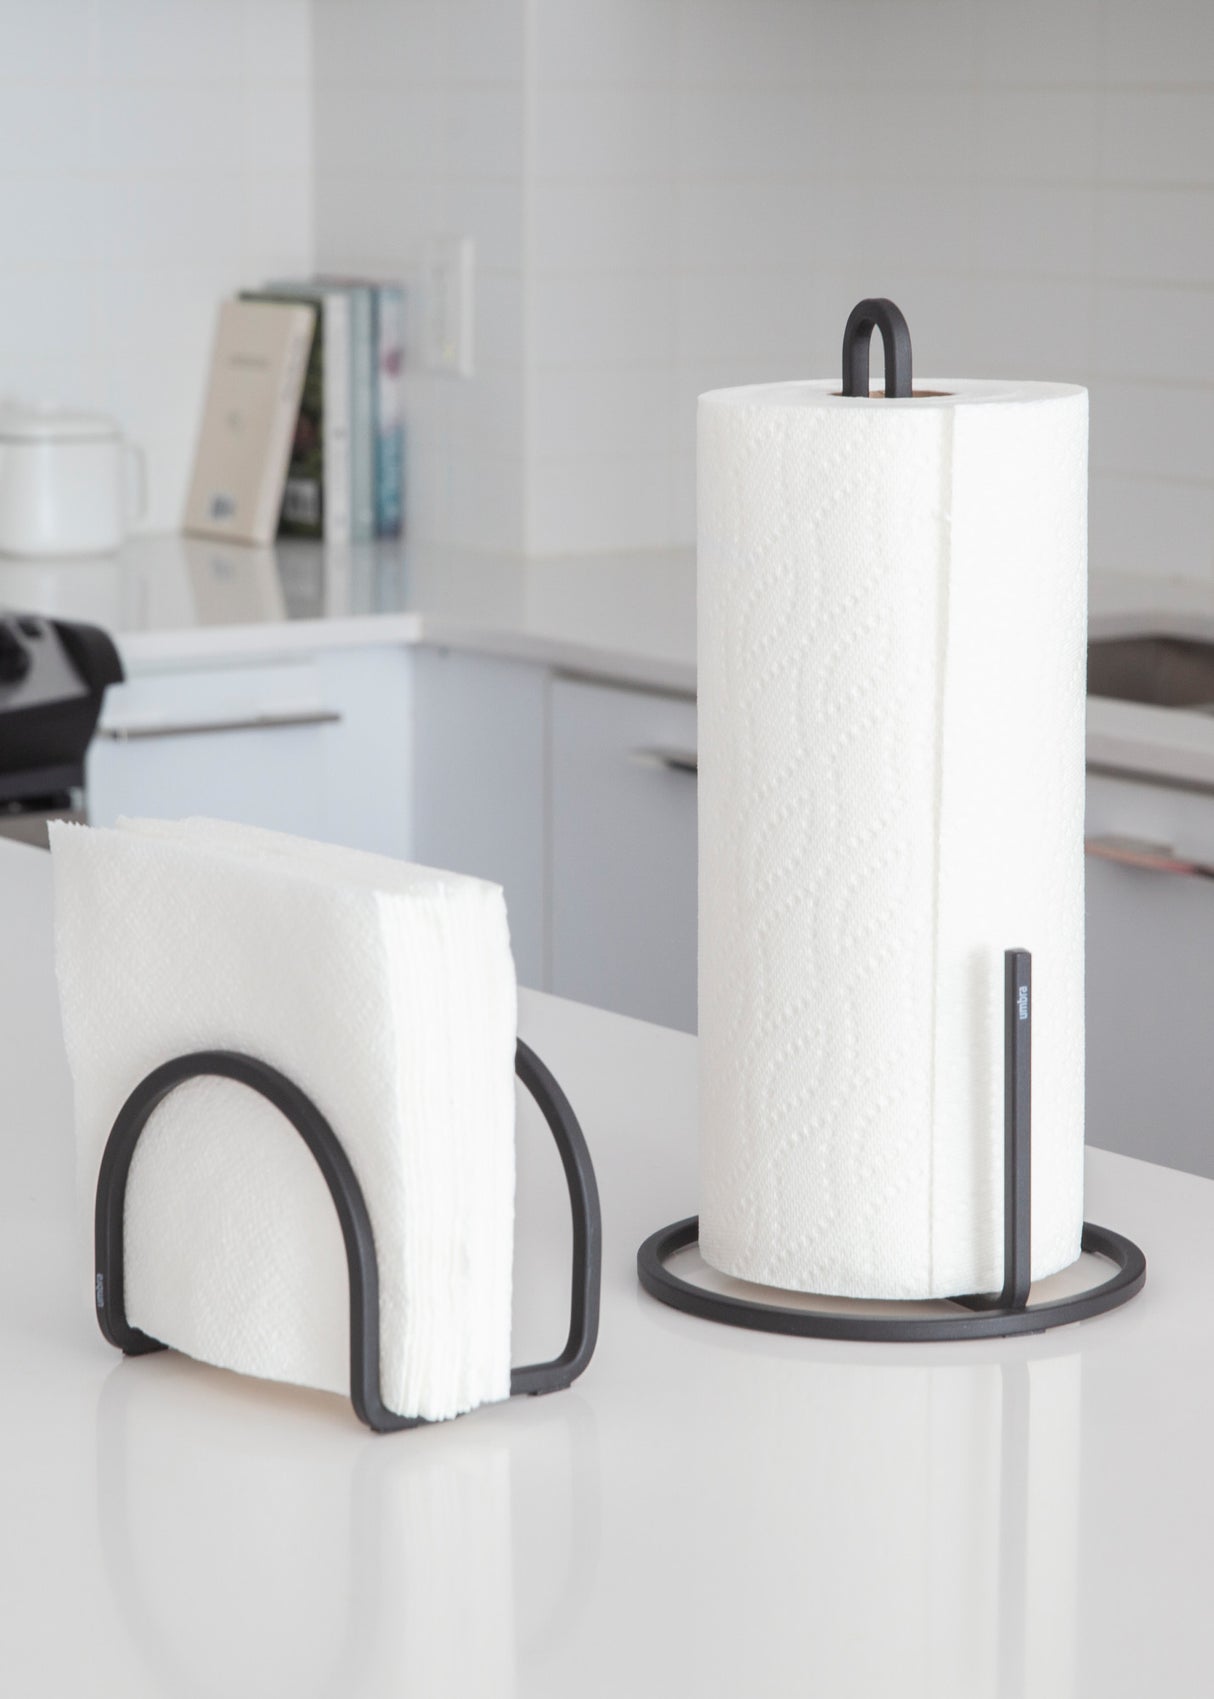 Countertop Paper Towel Holders | color: Black